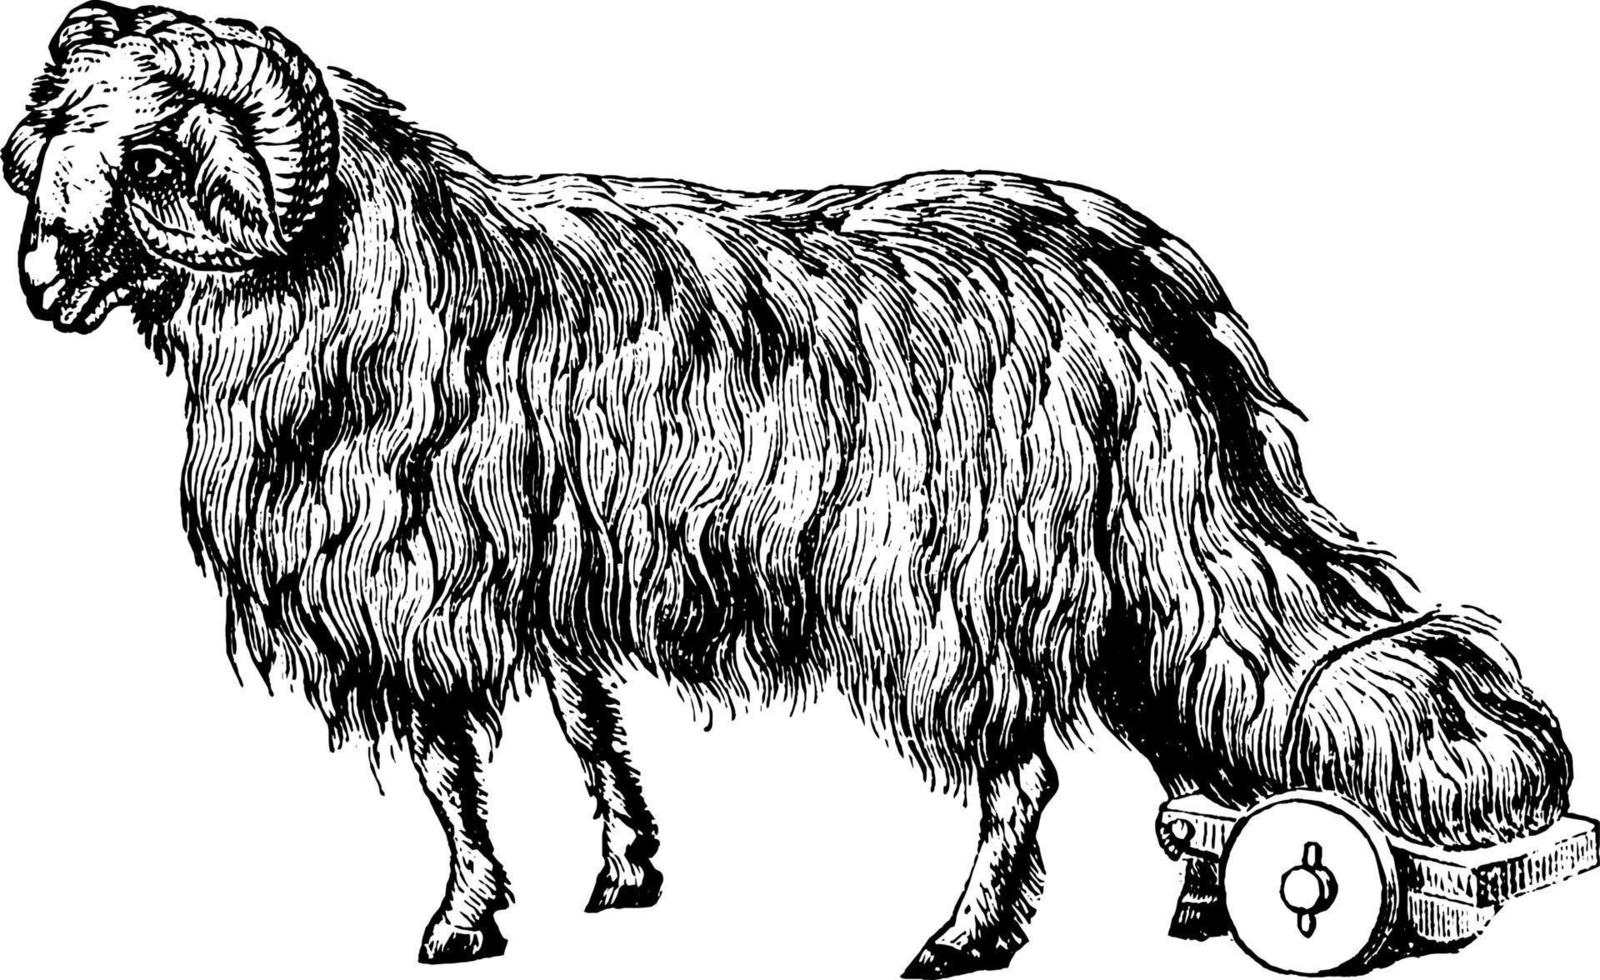 Sheep, vintage illustration. vector